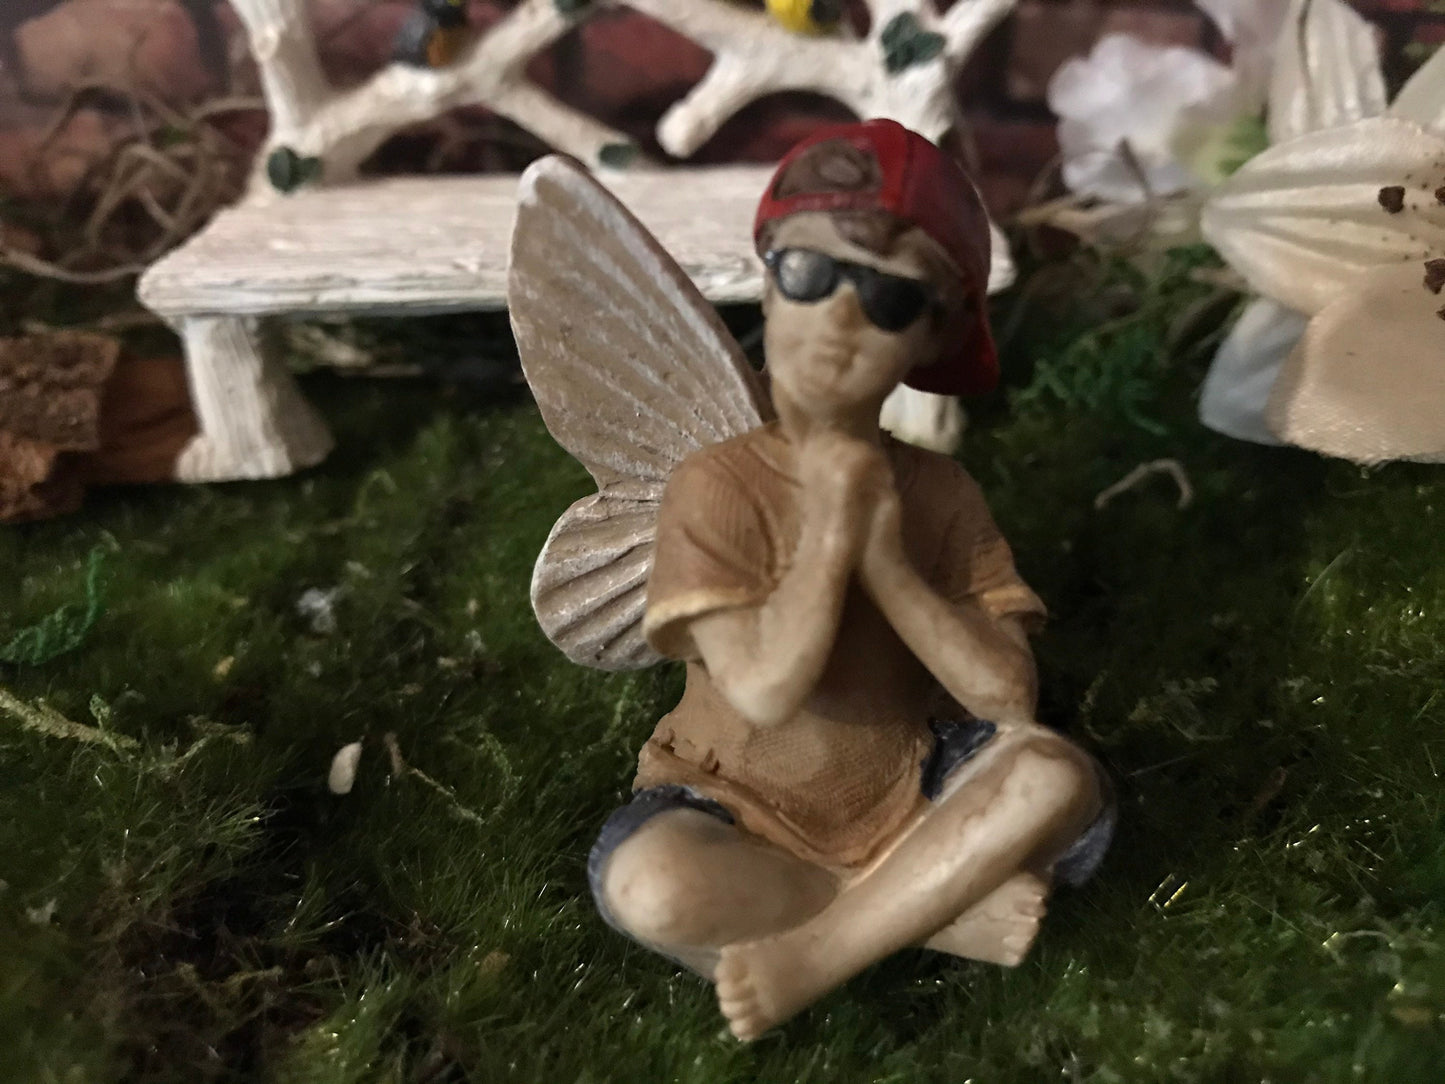 Fairy Boy wearing sunglasses and baseball cap